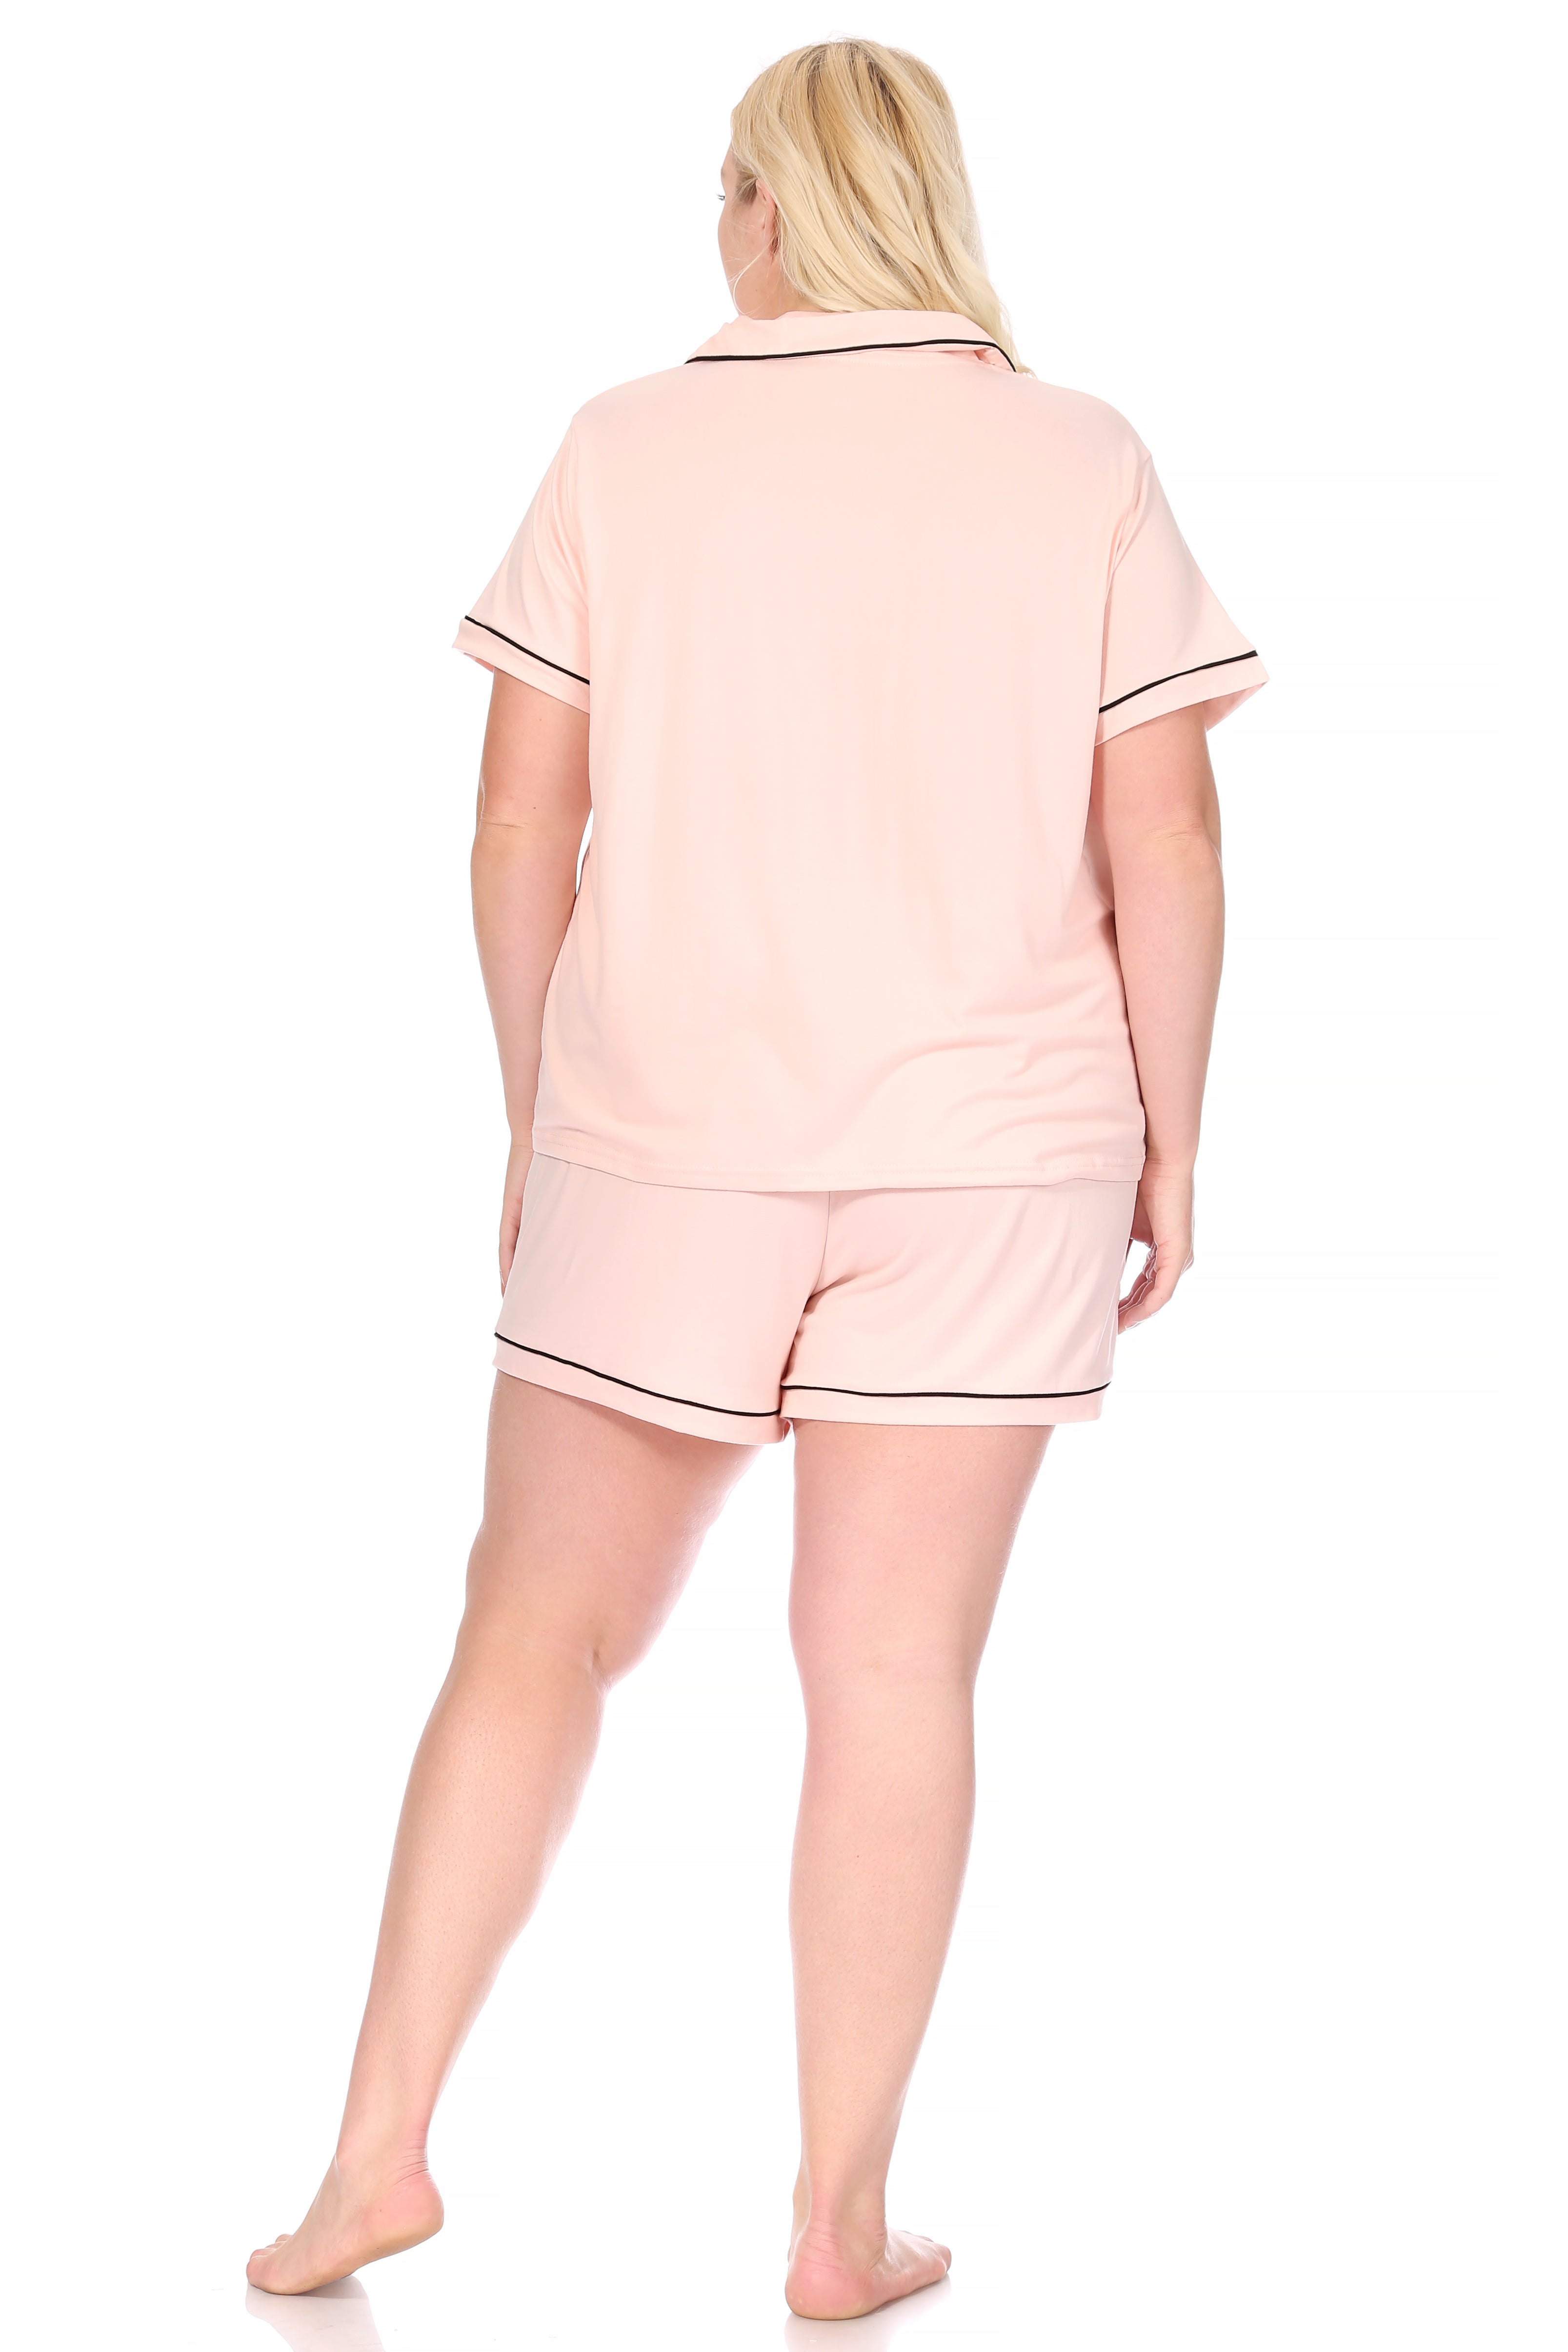 Women's Plus Size Short Sleeve Notch Collar Top and Short Pajama Set - Rae Dunn Wear